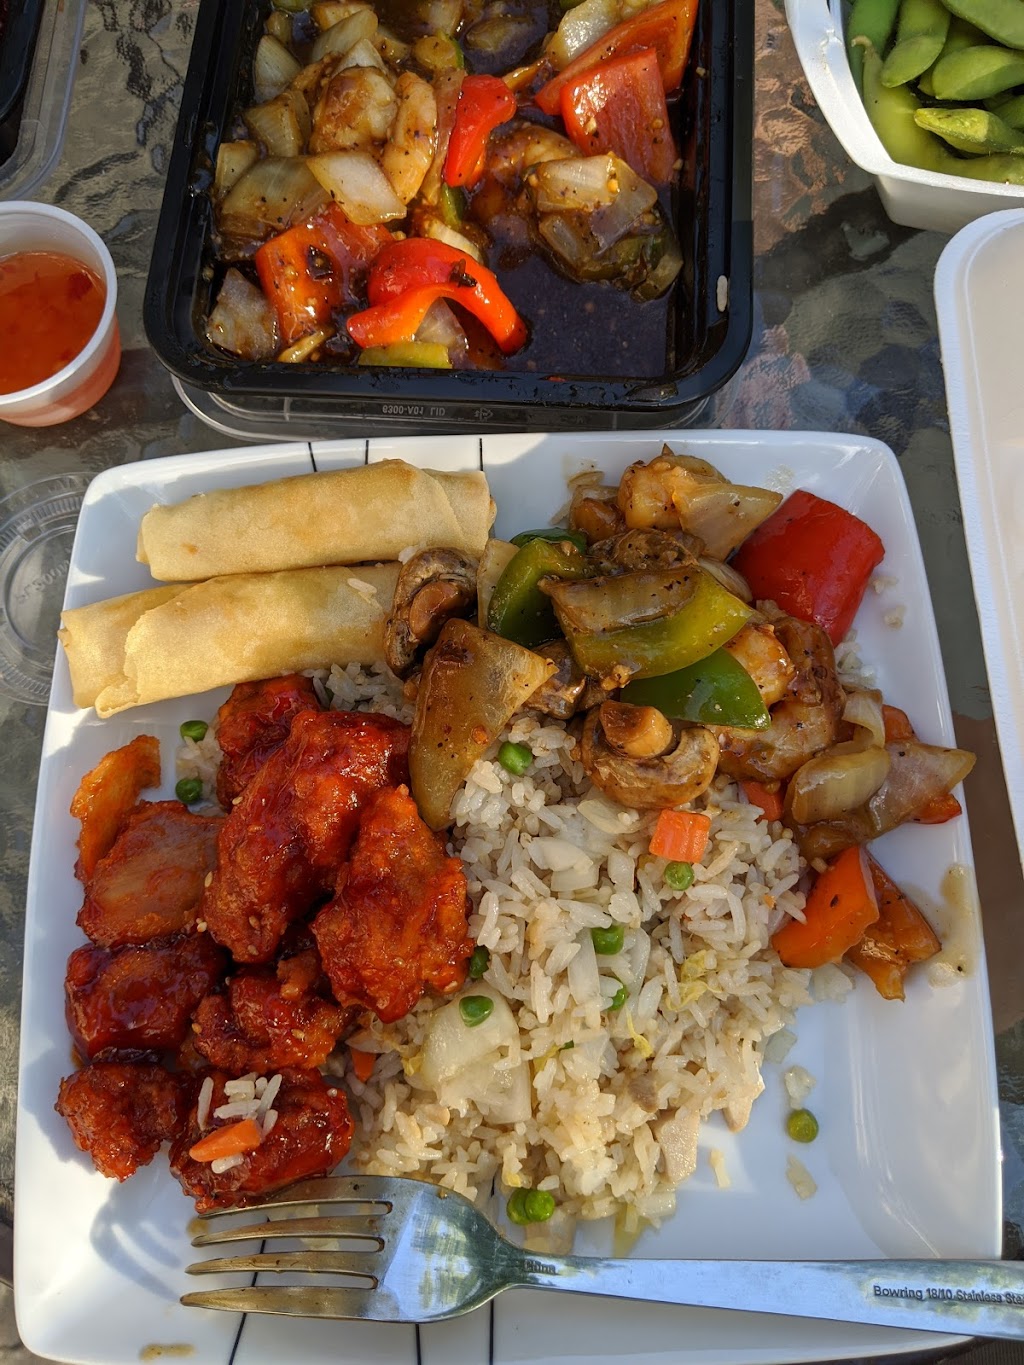 Decent Asian cuisine(Chinese food&Sushi) | 79 E Davis St, Trenton, ON K8V 4K9, Canada | Phone: (613) 800-0373